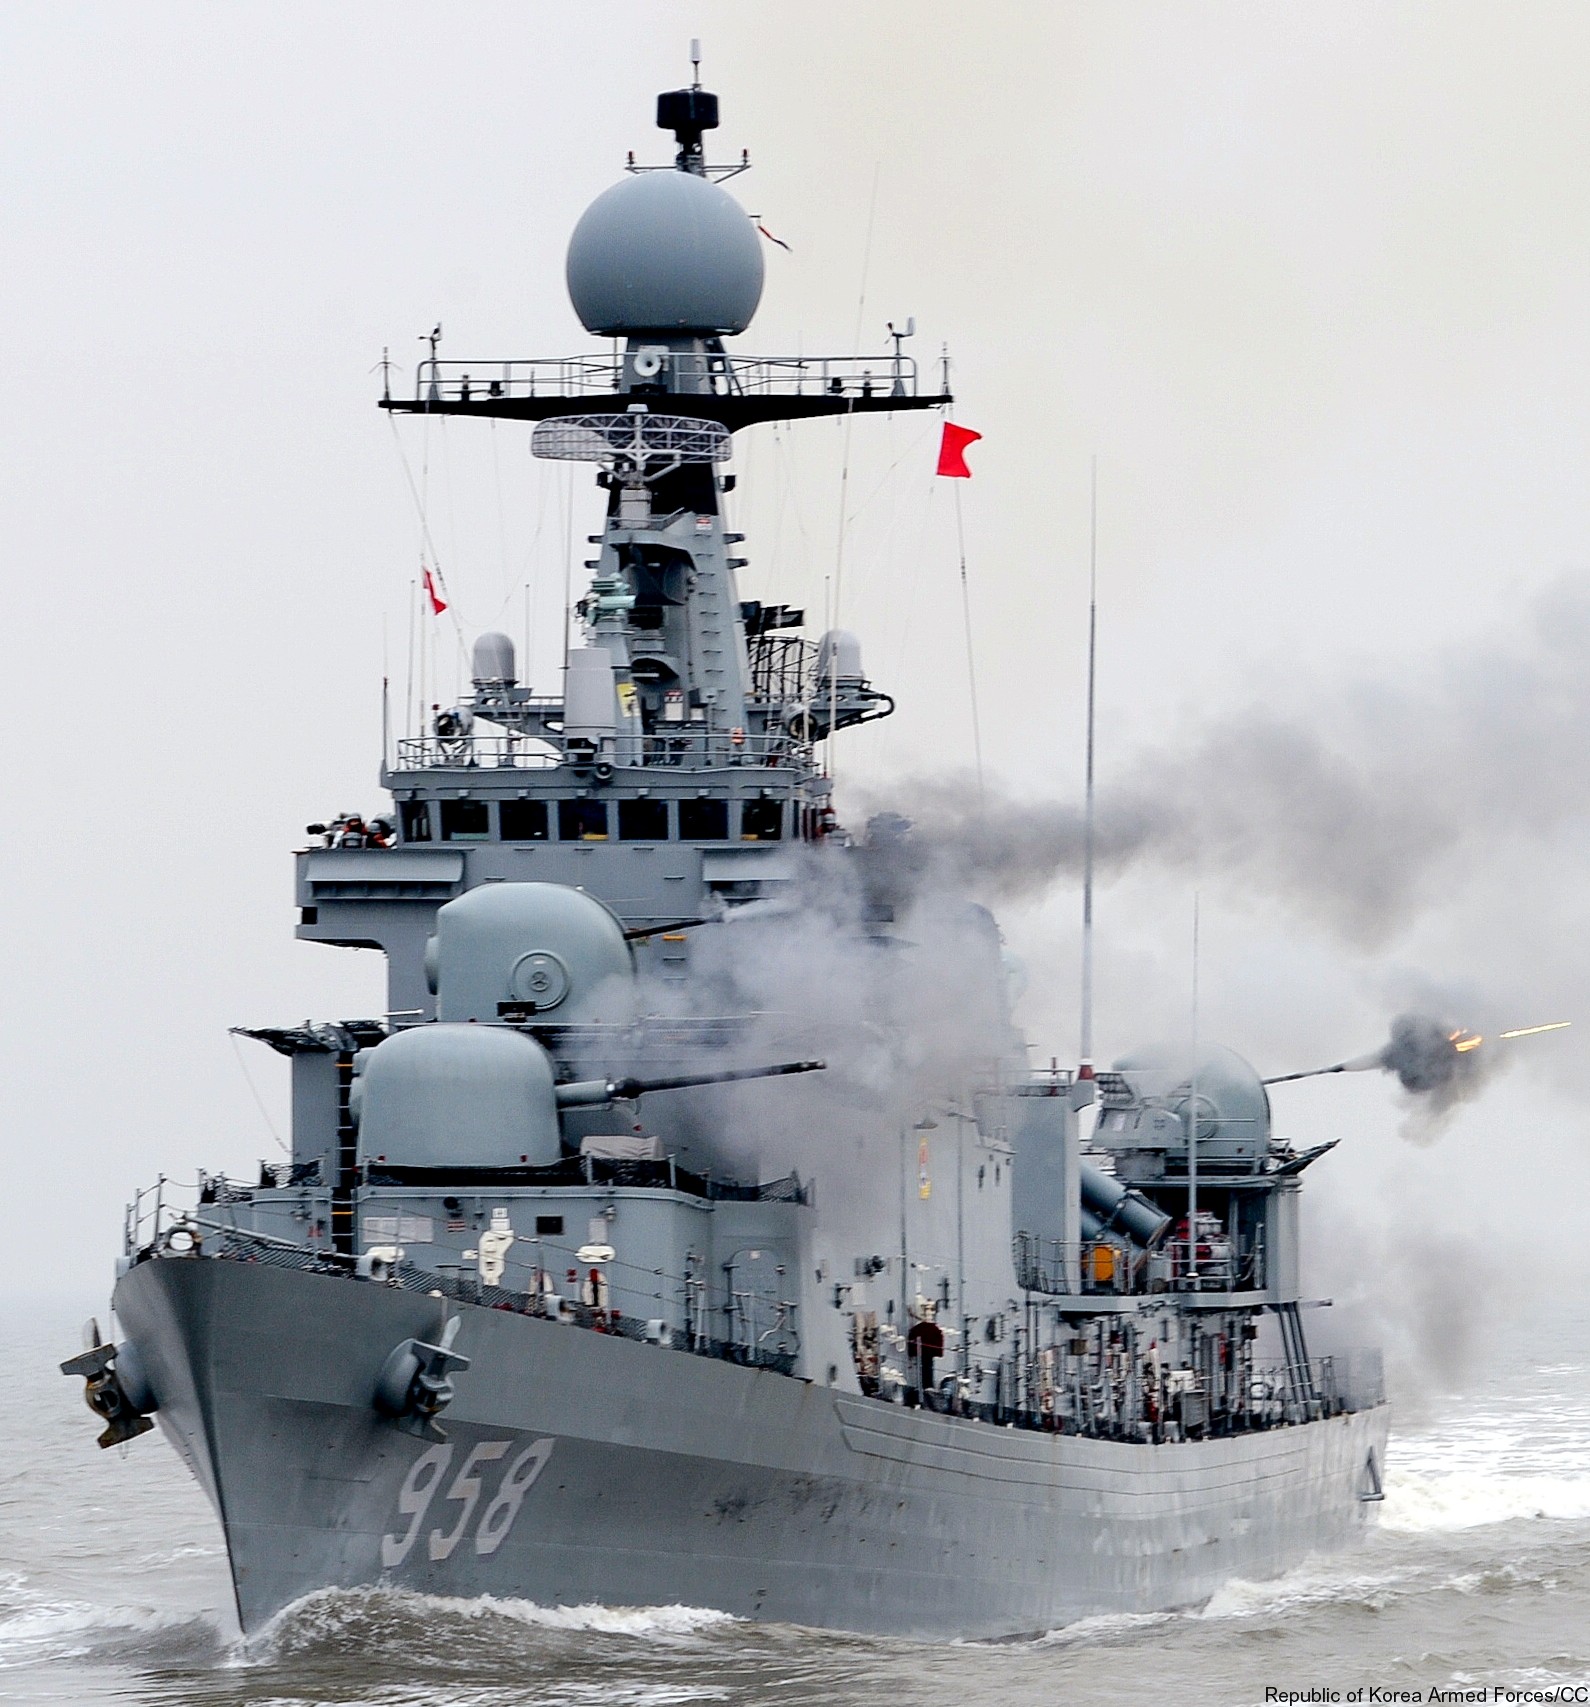 ff-958 roks jeju ulsan class frigate republic of korea navy rokn 02 gun fire exercise